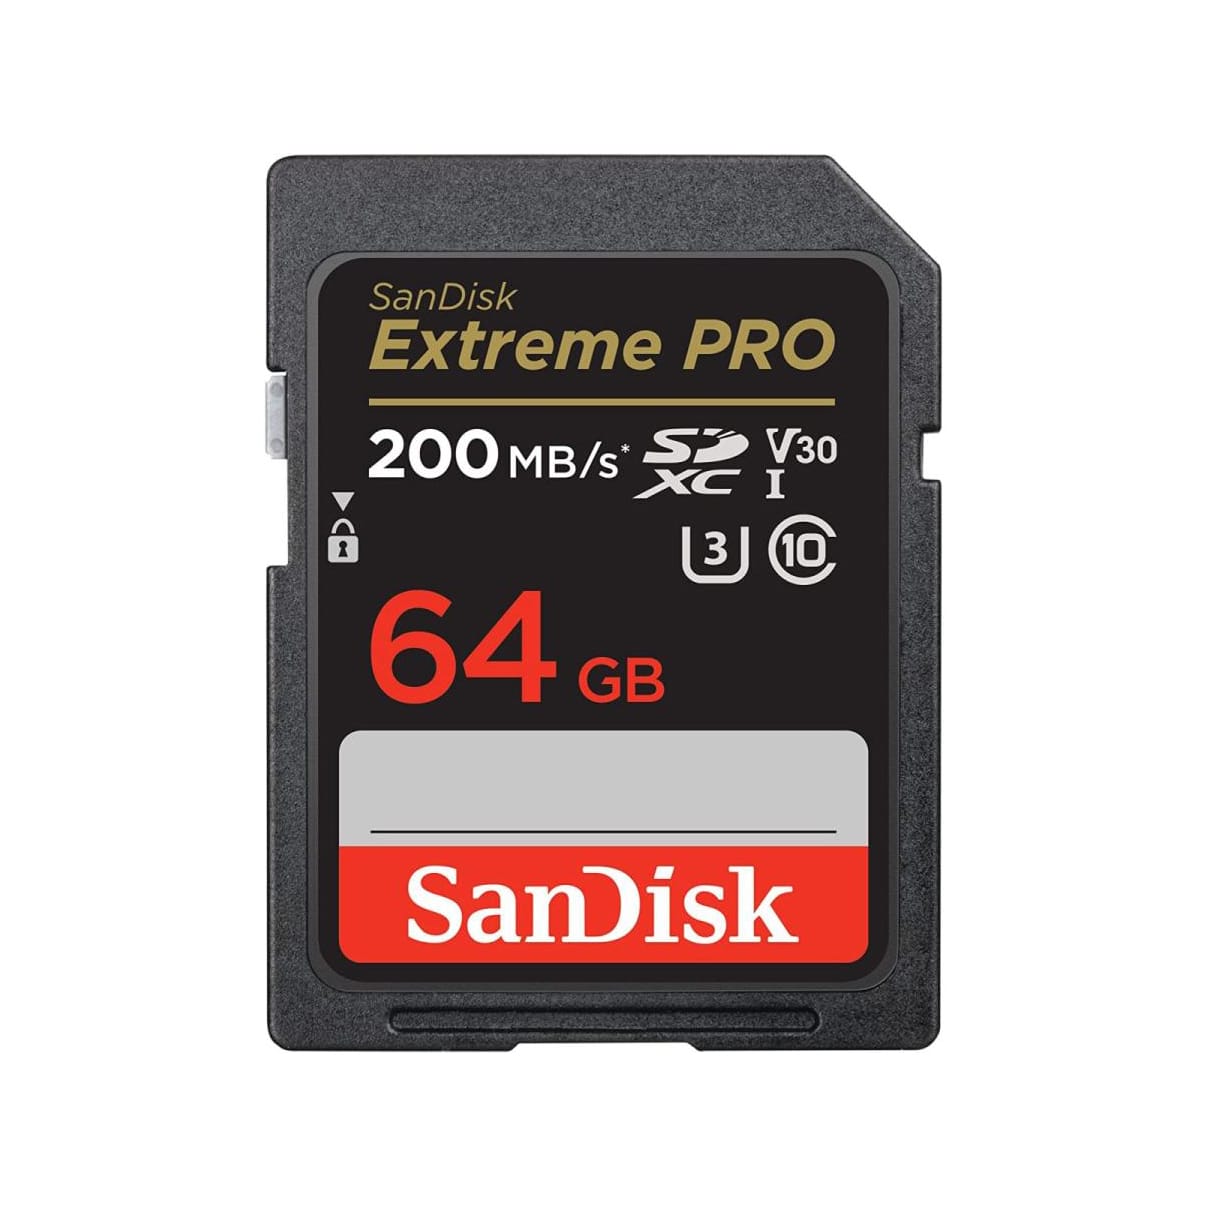 SanDisk(サンディスク) Extreme Proシリーズ 128GB SDXC UHS-I U3 V30 Class10 R:200MB/s  W:90MB/s パッケージ SDSDXXD-128G-GN4IN(128GB): 記録メディア・電源・ケーブル 銀一オンラインショップ |  撮影用背景-プロフェッショナル映像・撮影 ...